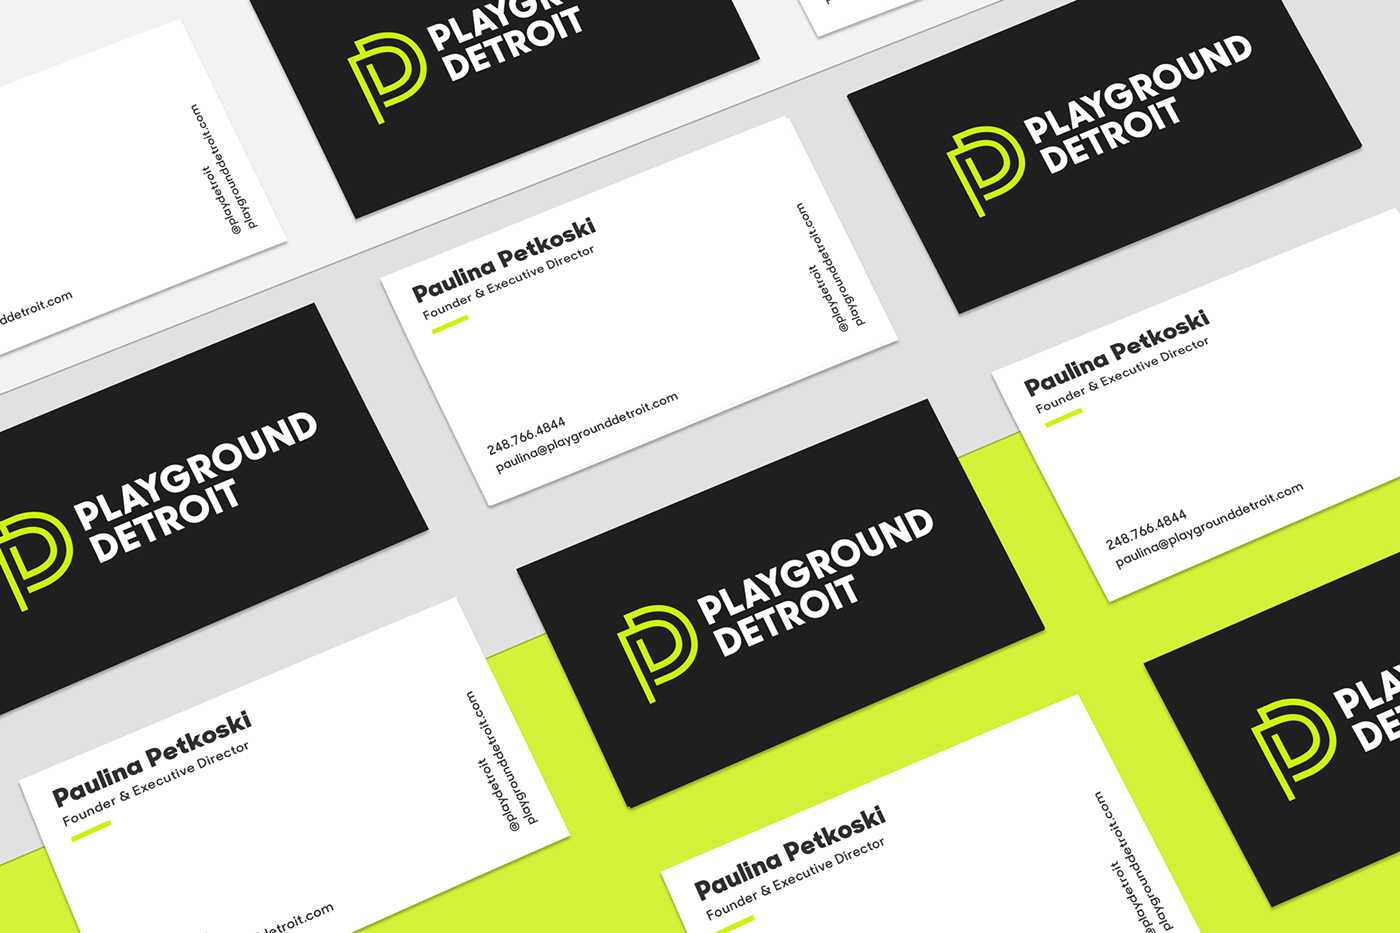 detroit playground detroit identity logo Website stationary art design Collective  Rebrand